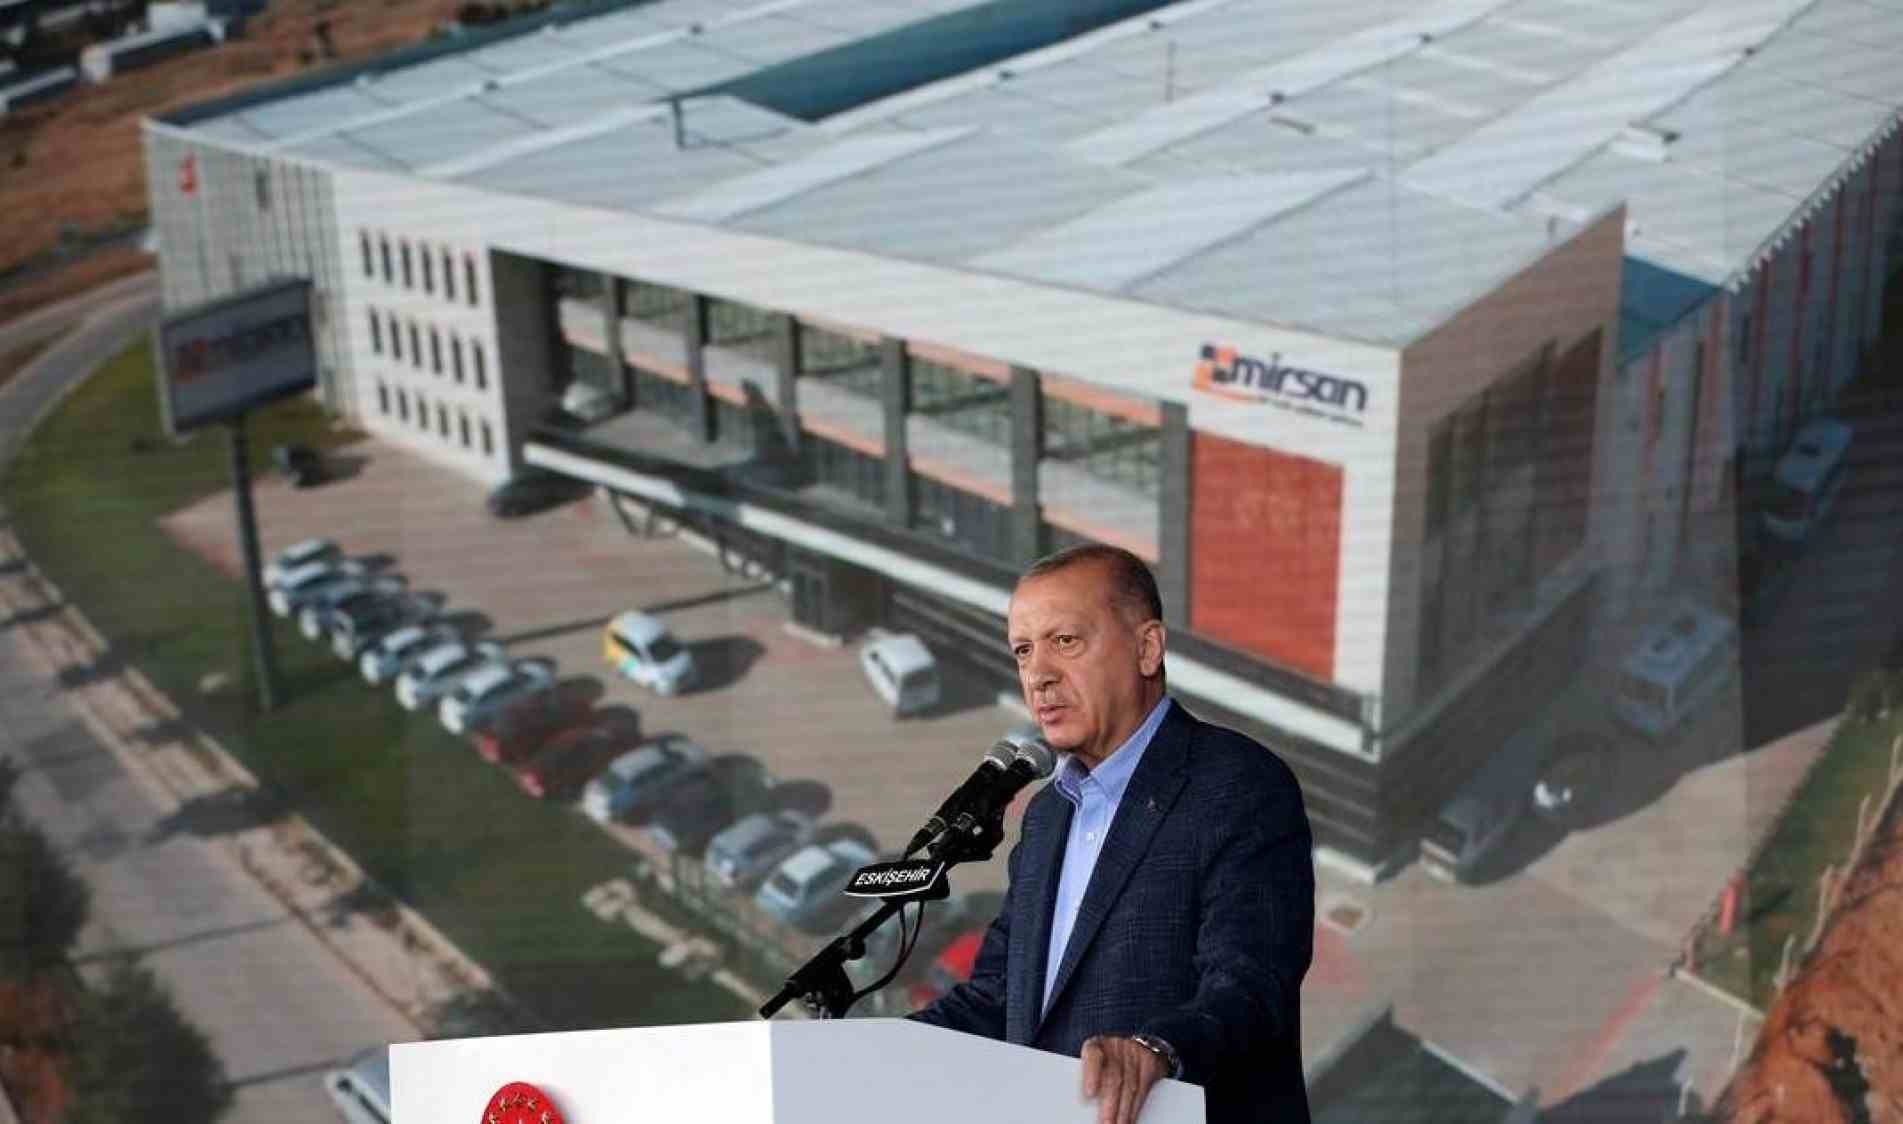 Presidente turco, Recep Tayyip Erdogan.